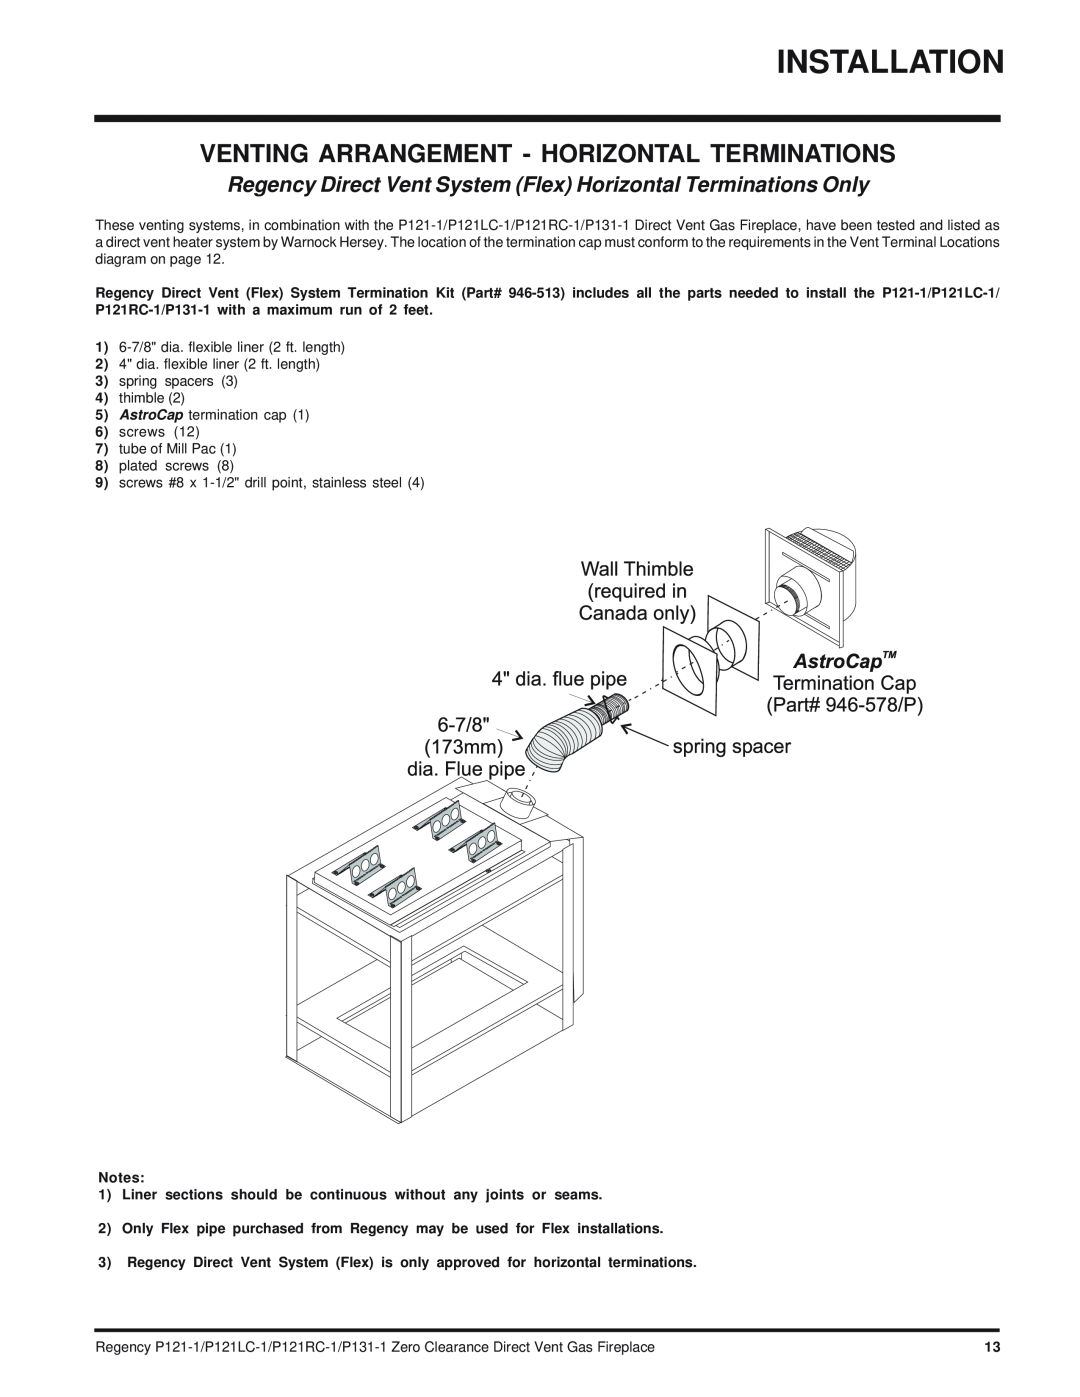 Regency P121RC, P121LC, P131 installation manual Installation, Venting Arrangement - Horizontal Terminations 